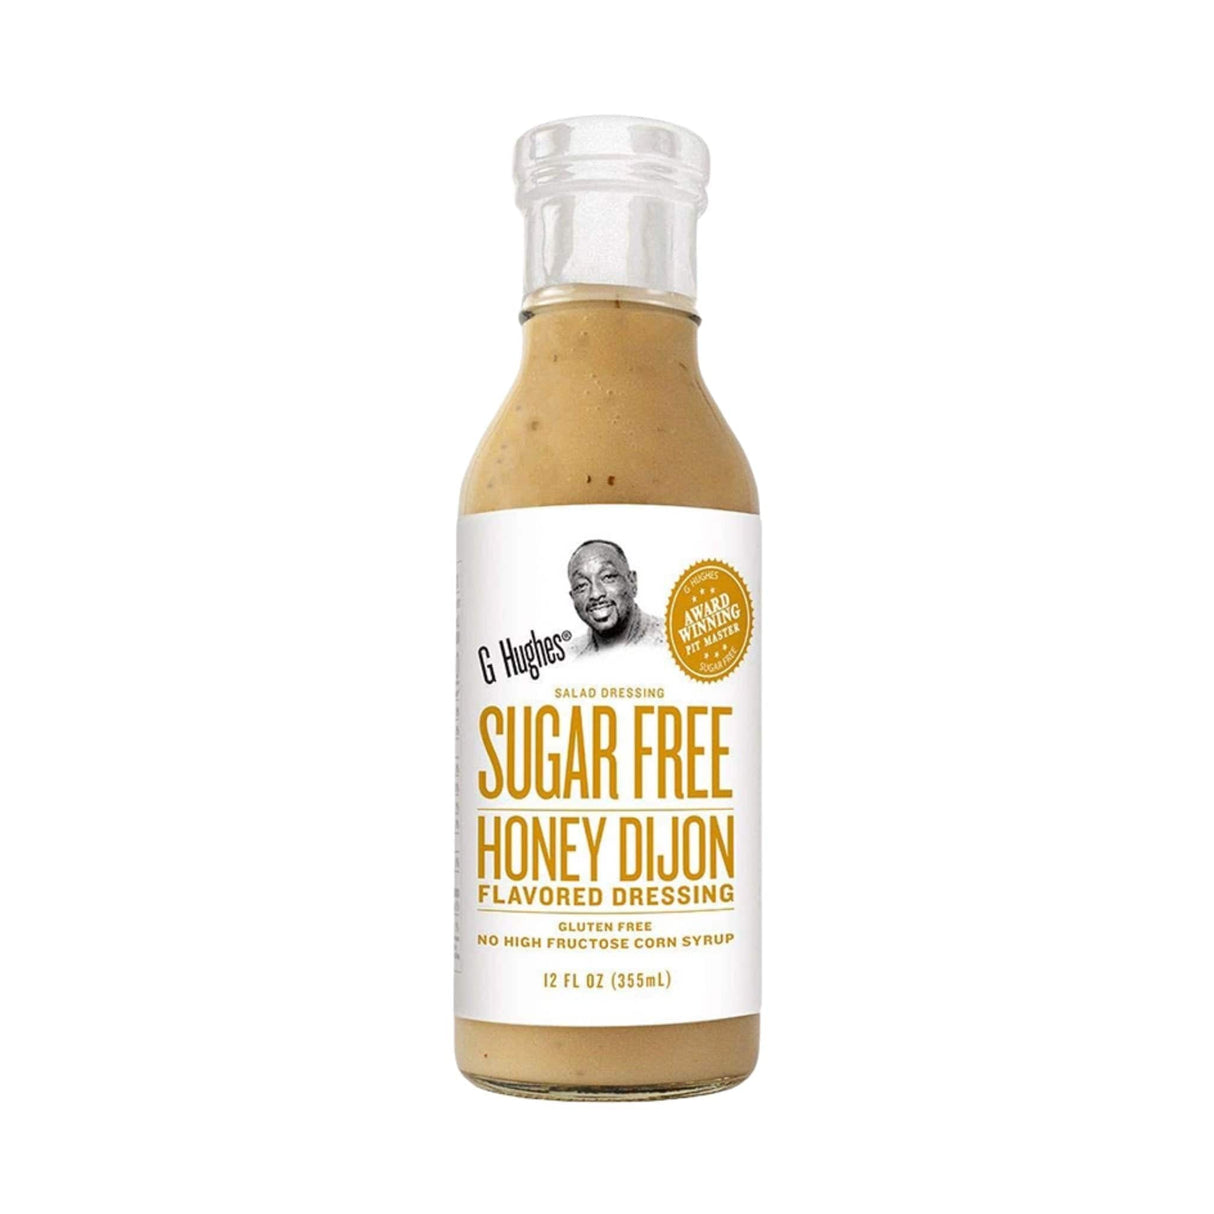 G Hughes Sugar Free Honey Dijon Flavored Dressing - hot sauce market & more